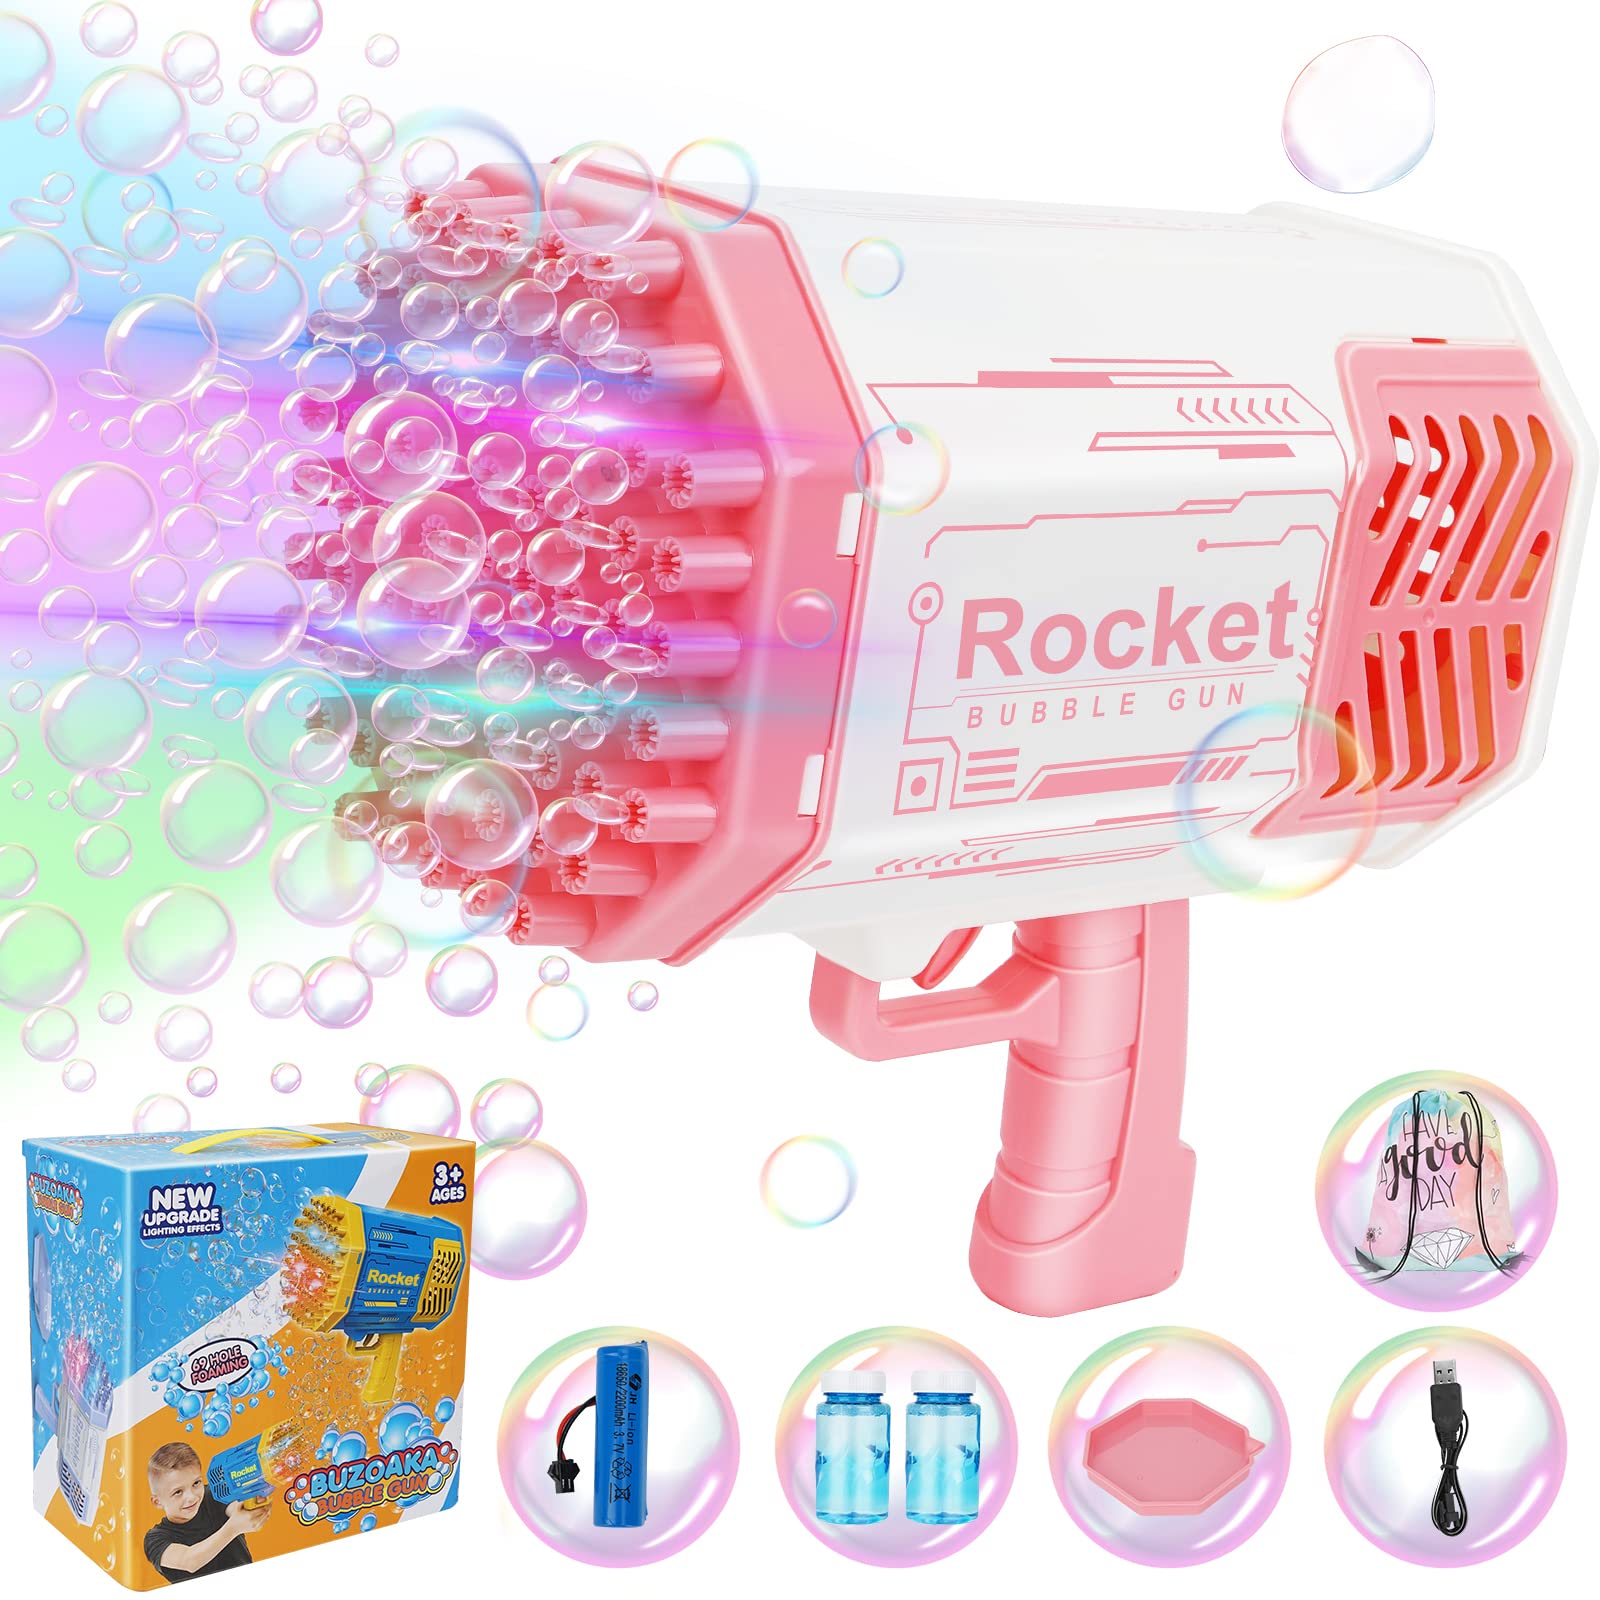 ArtCWK Bubble Machine Bubble gun 69 Holes with colorful Lights and Bubble Solution, Bubble Blower Bubble Maker for Kids Toddlers Adults